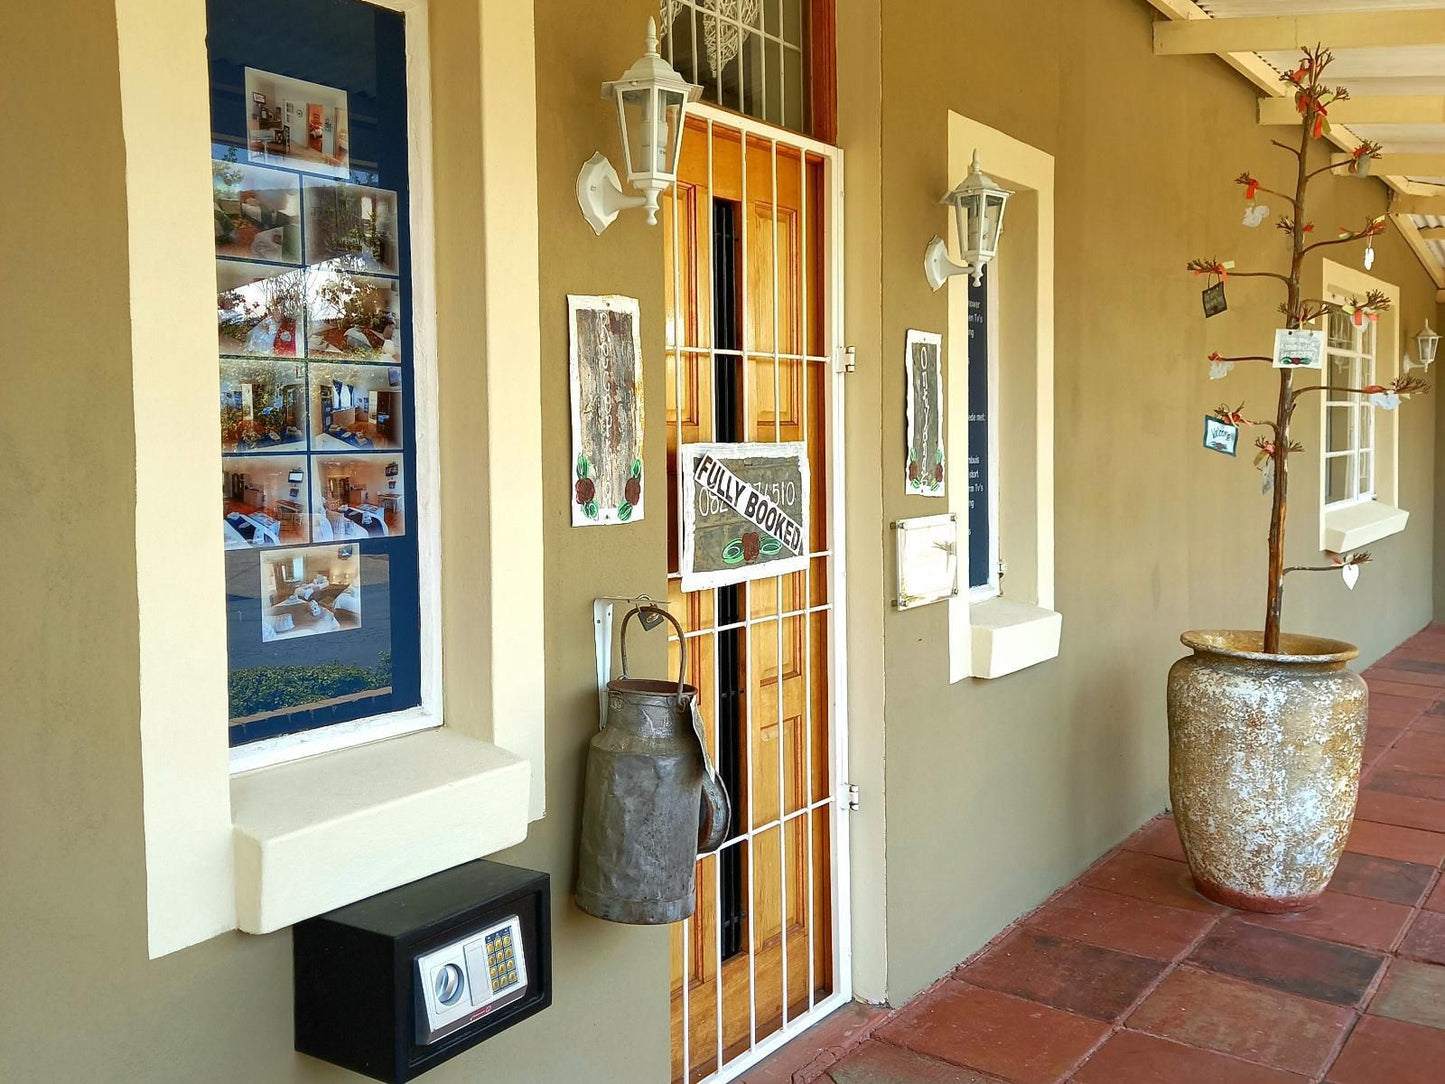 Karoorus Graaff Reinet Eastern Cape South Africa Door, Architecture